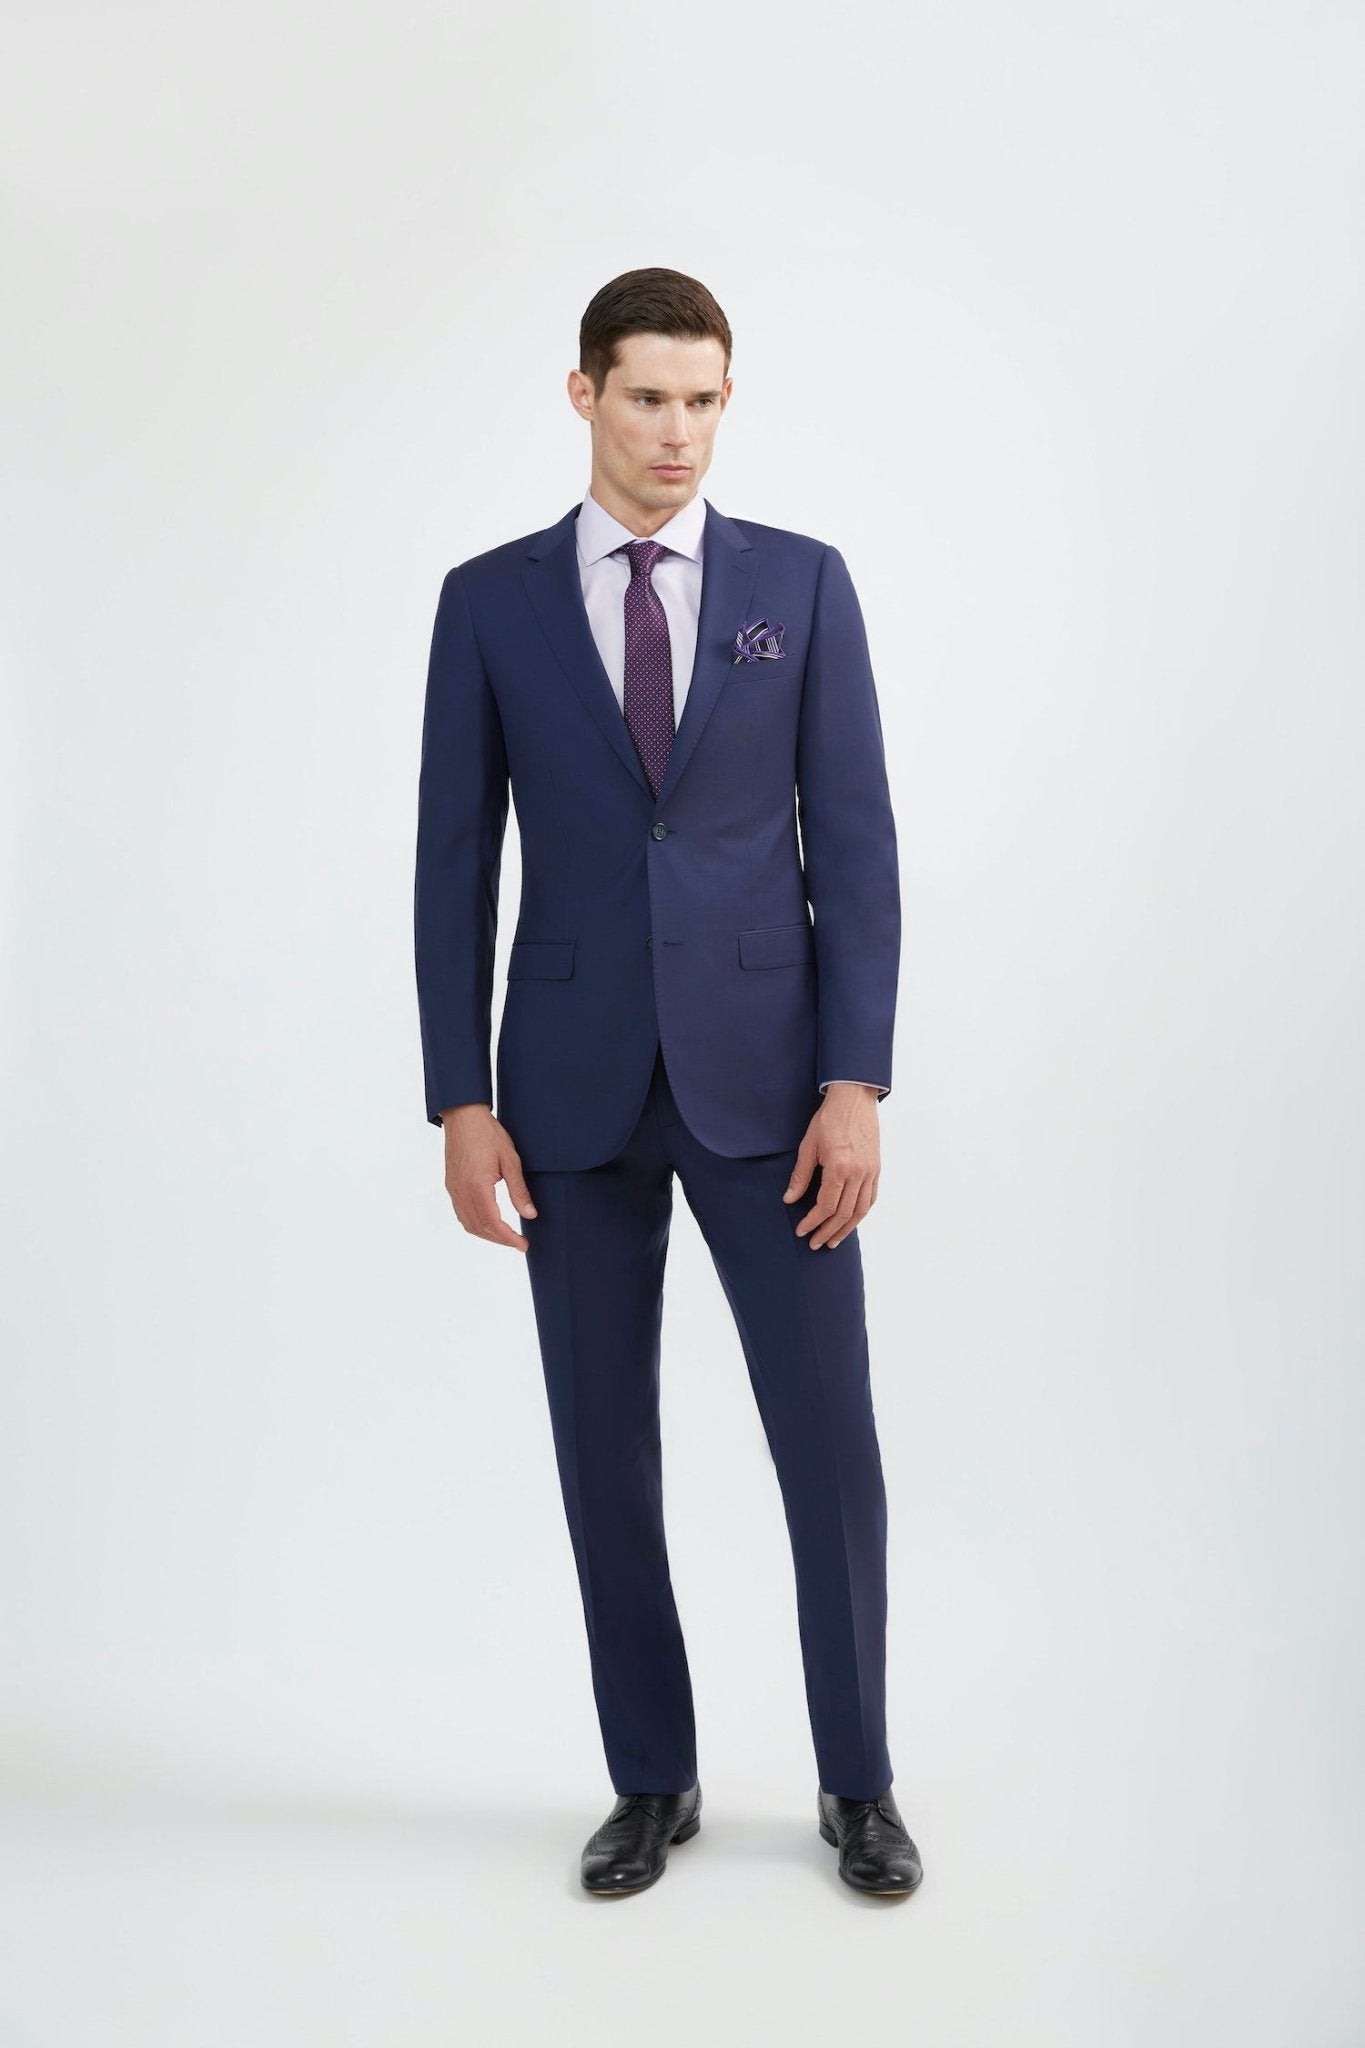 Luxurious Blue Suit for Men  Shop Timeless Navy Blue Italian Wool